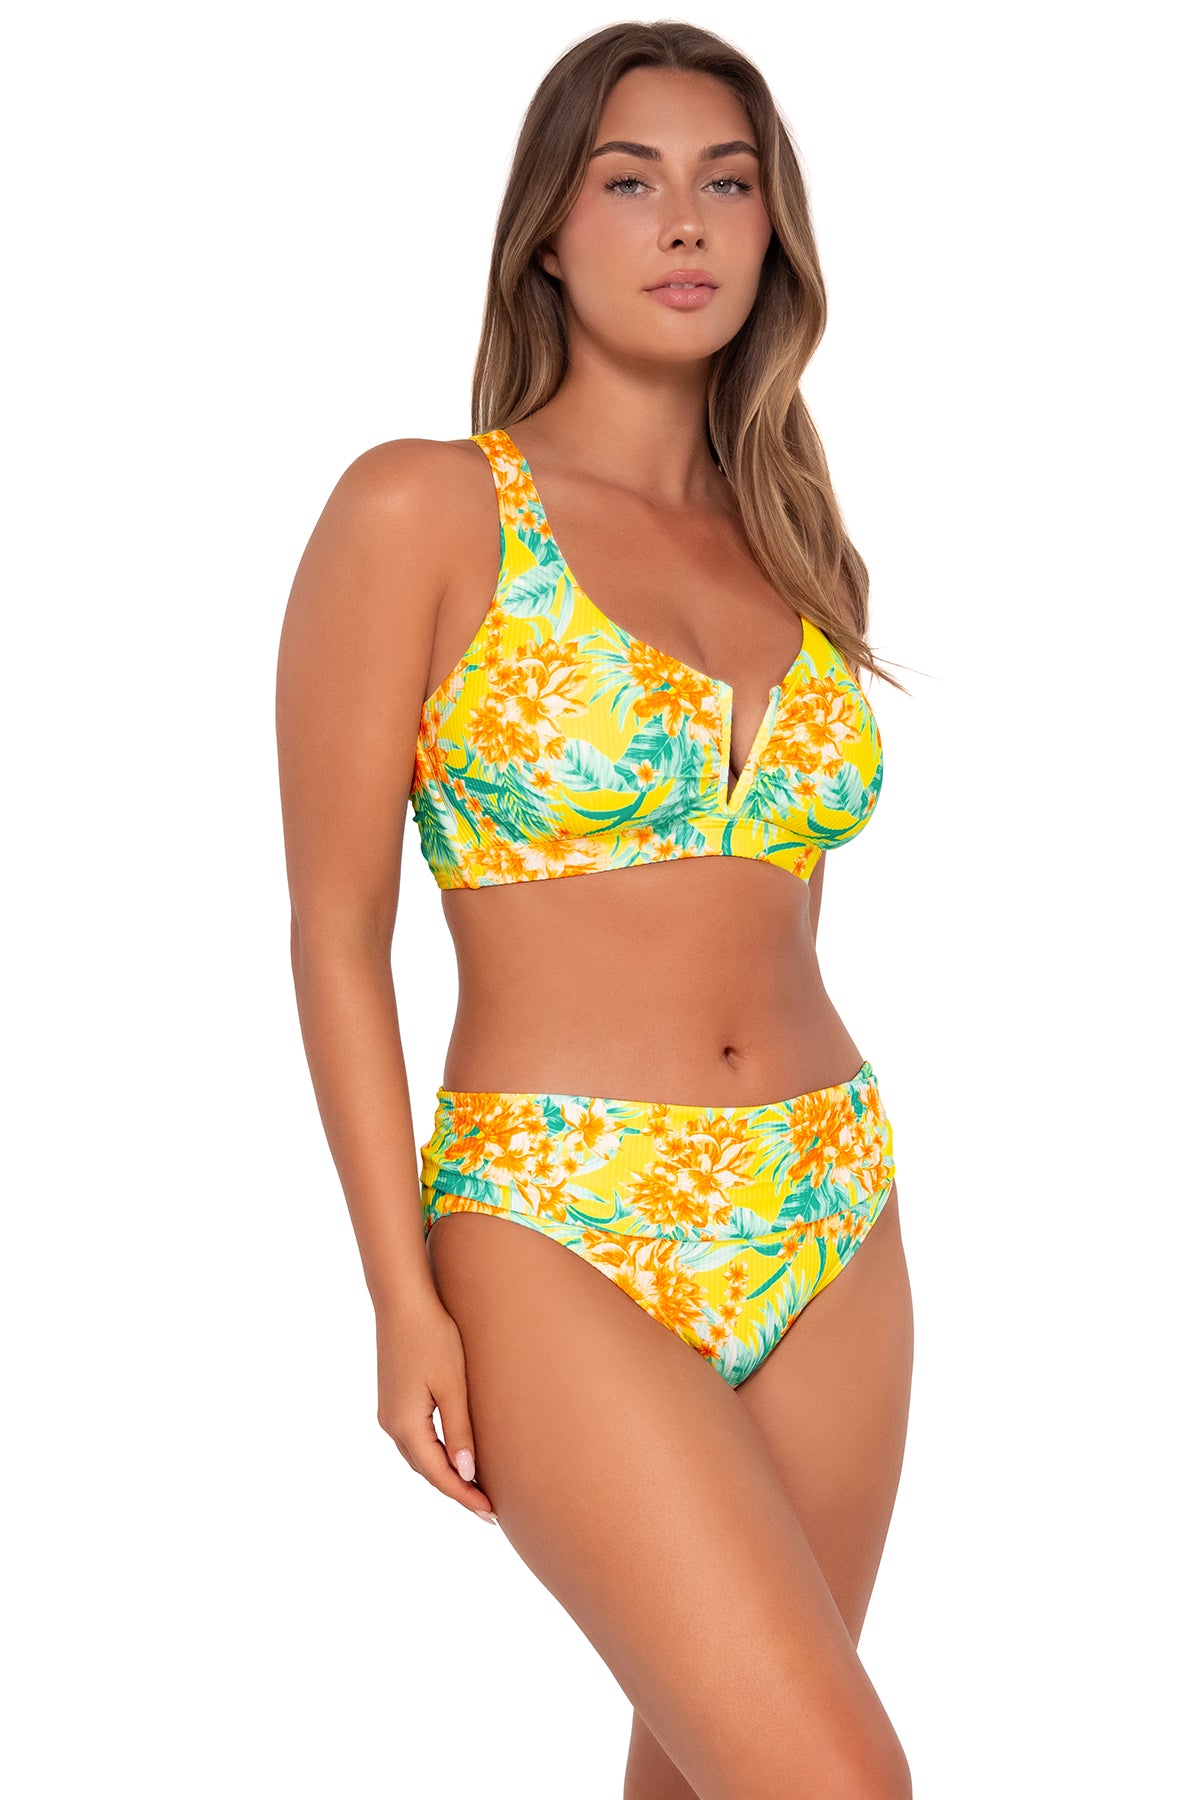 Side pose #1 of Taylor wearing Sunsets Golden Tropics Sandbar Rib Unforgettable Bottom with matching Vienna V-Wire bikini top